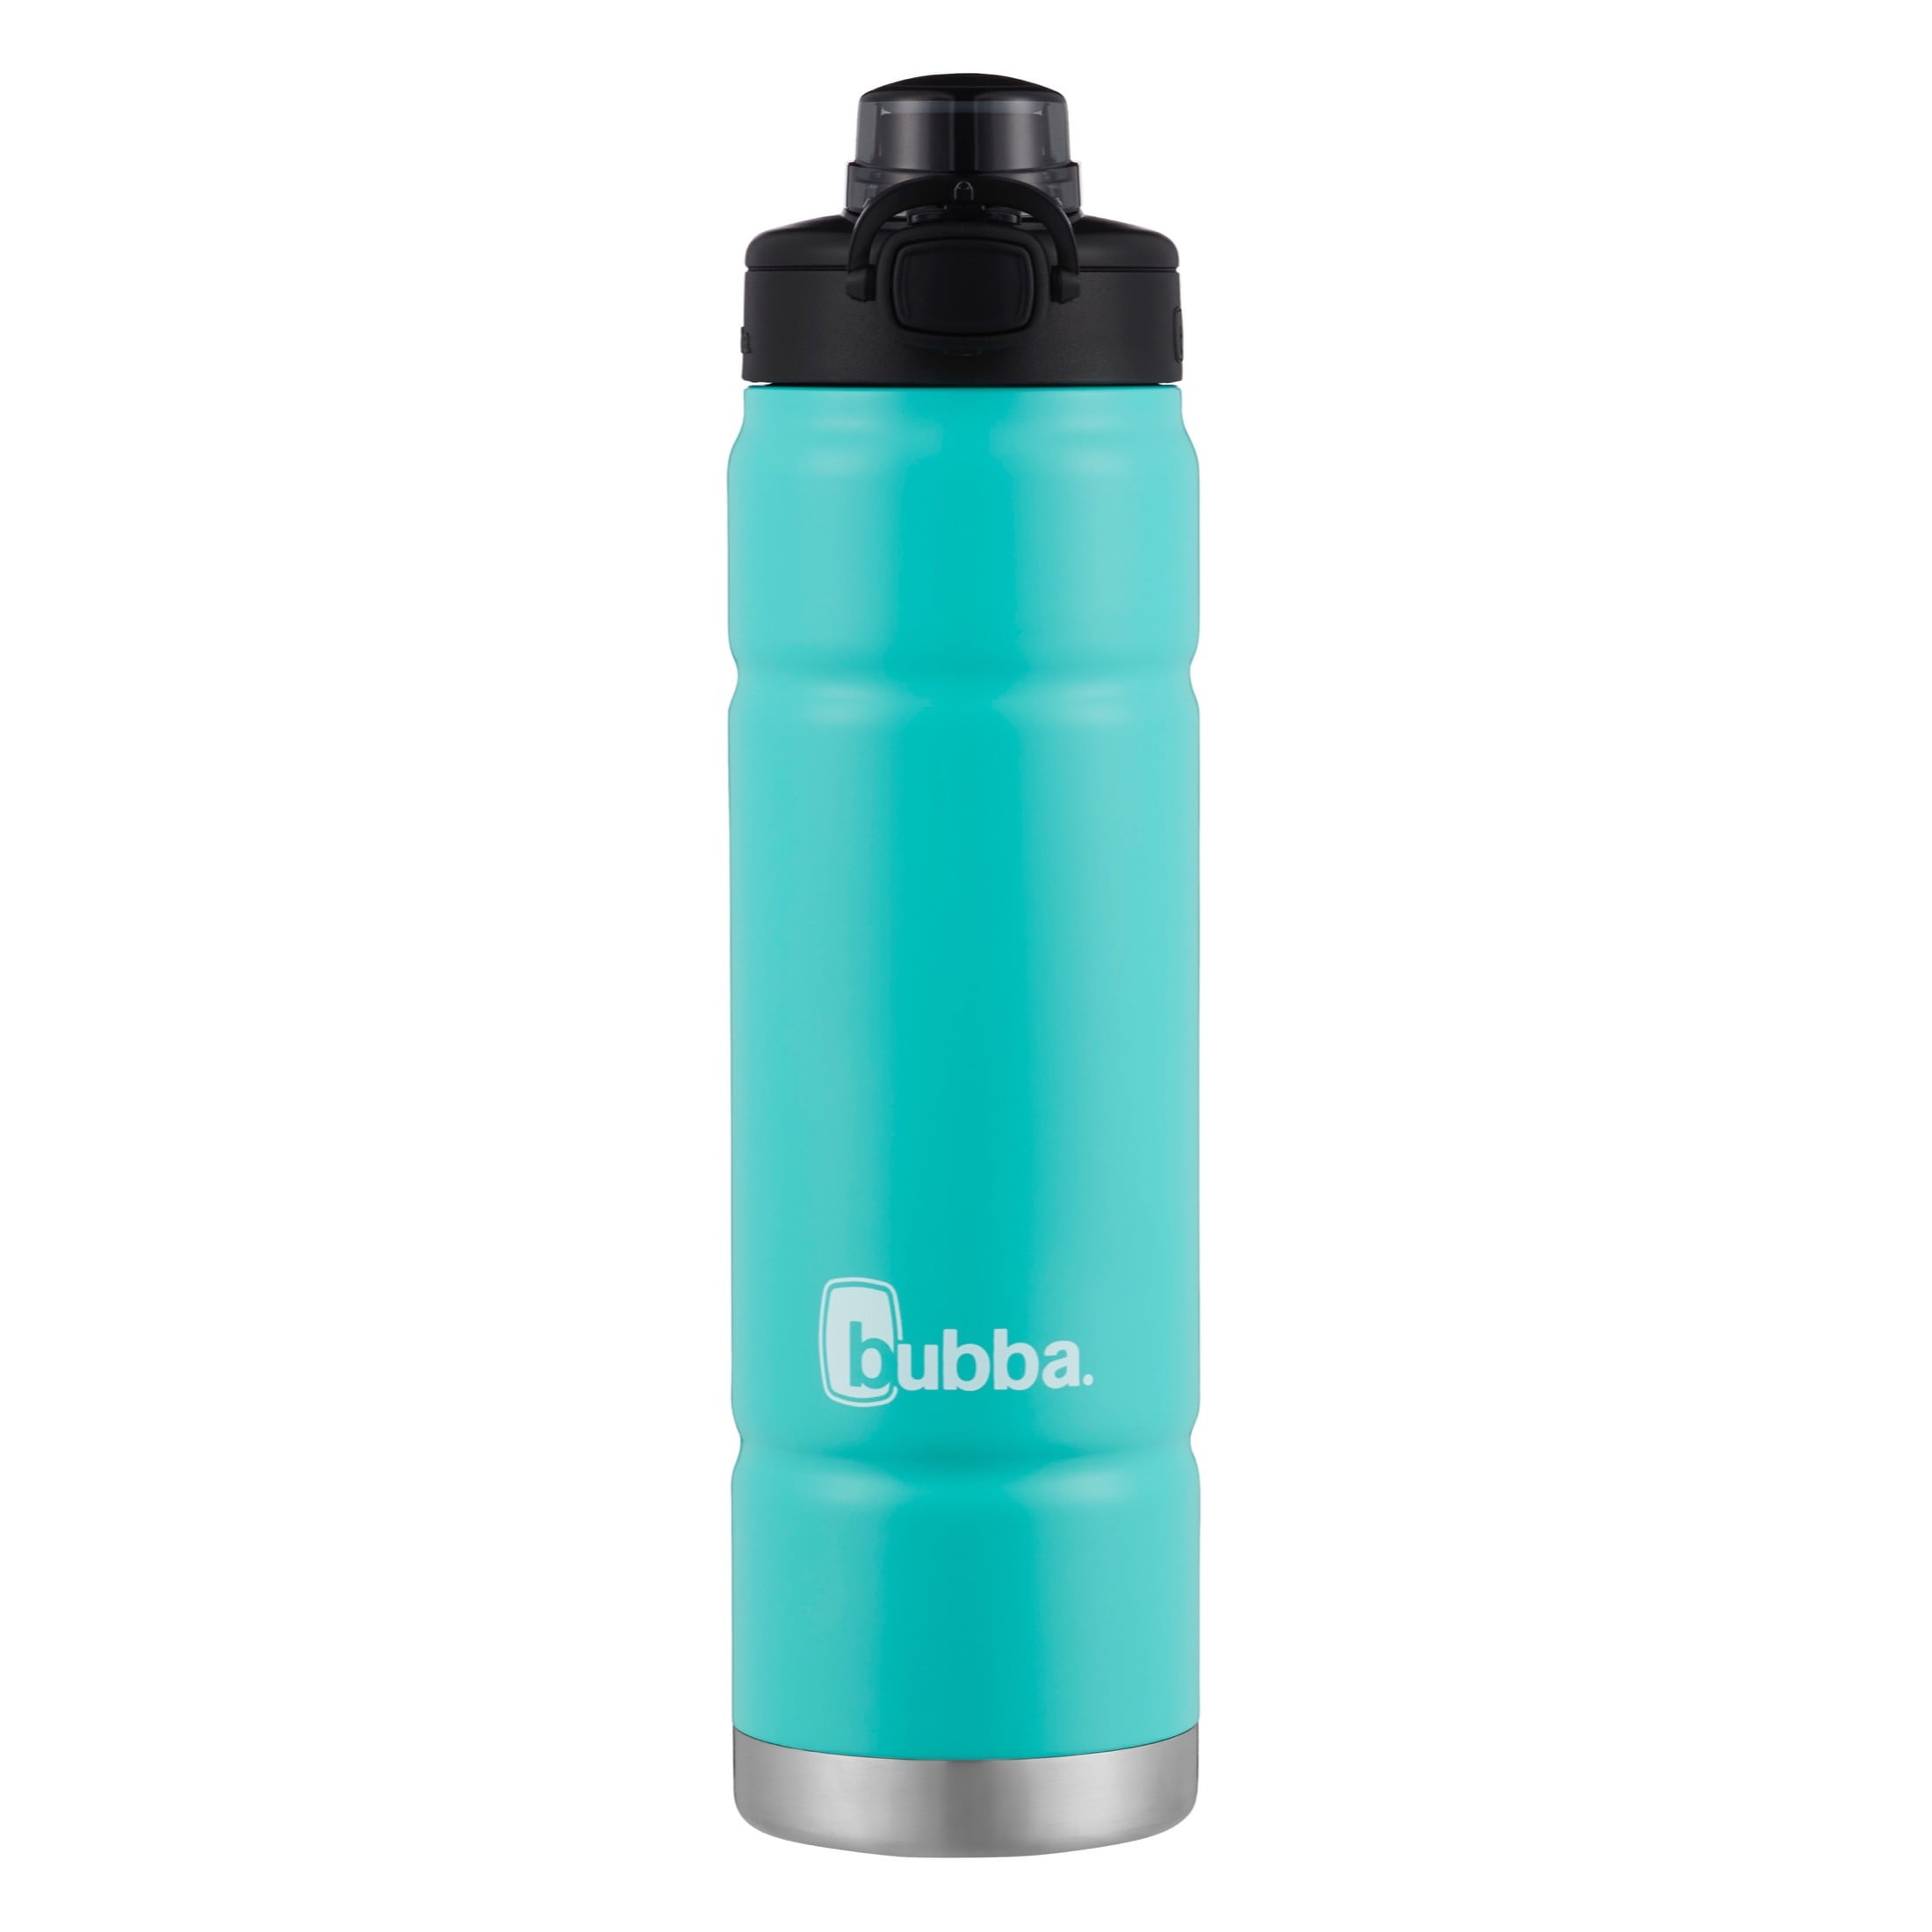  bubba Trailblazer Vacuum Bottle with Straw Lid - 40